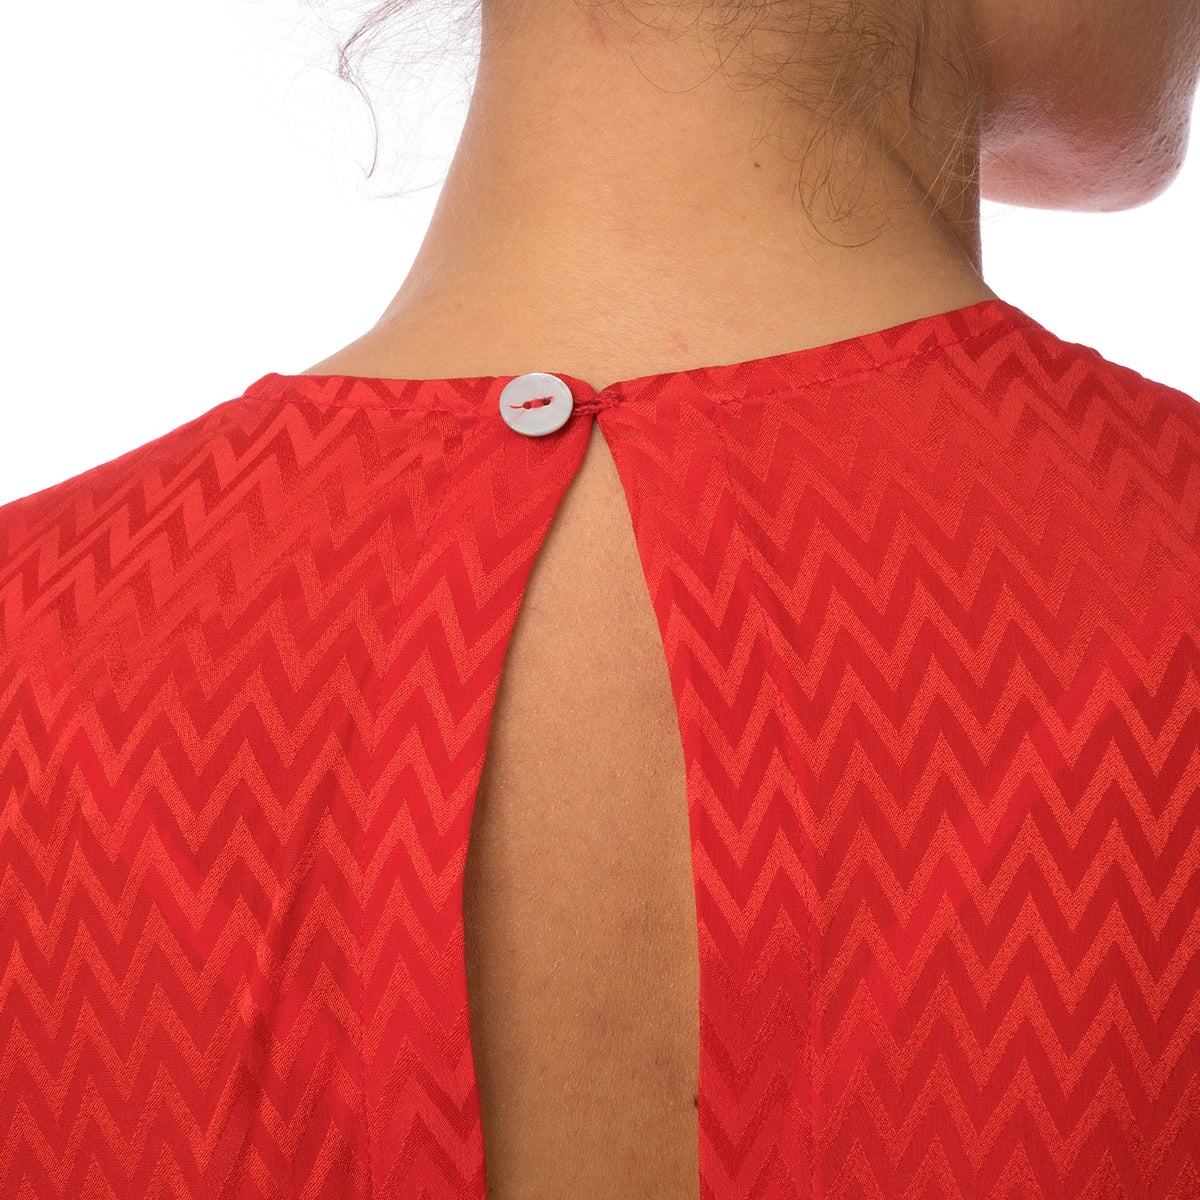 Marios Asymmetric Dress w/ Seperate Sleeves Red - Concrete